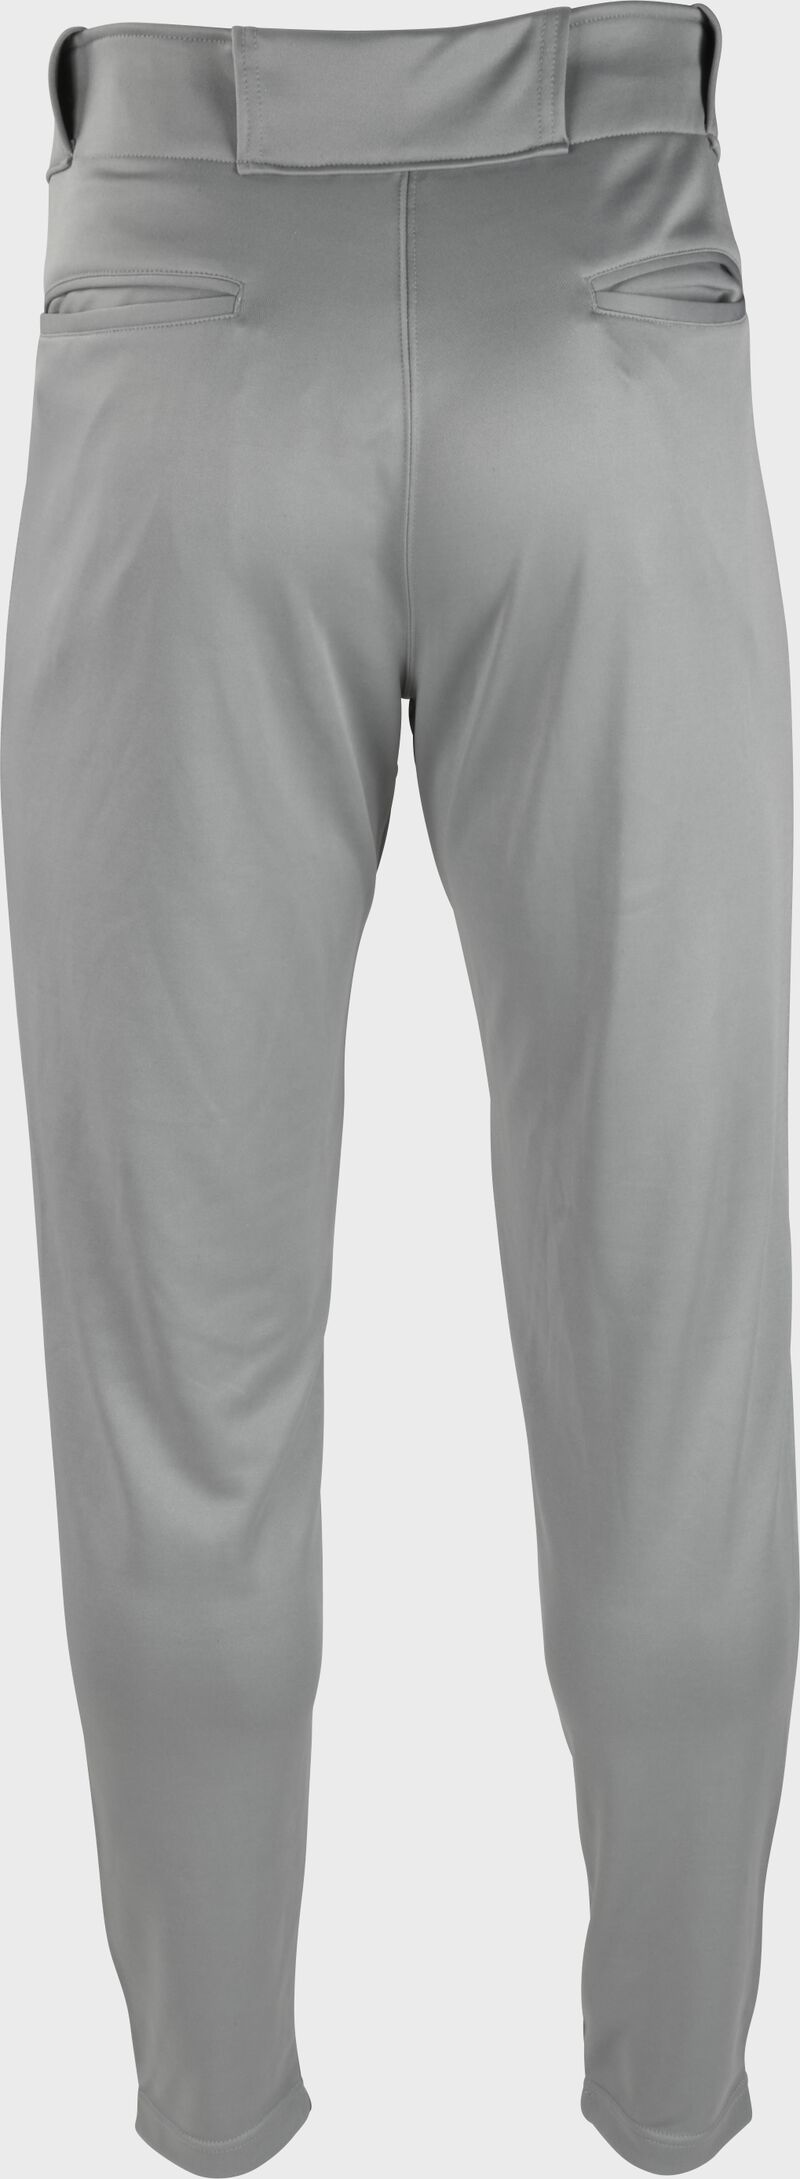 Rawlings Launch Jogger-Style Men's Baseball Pants